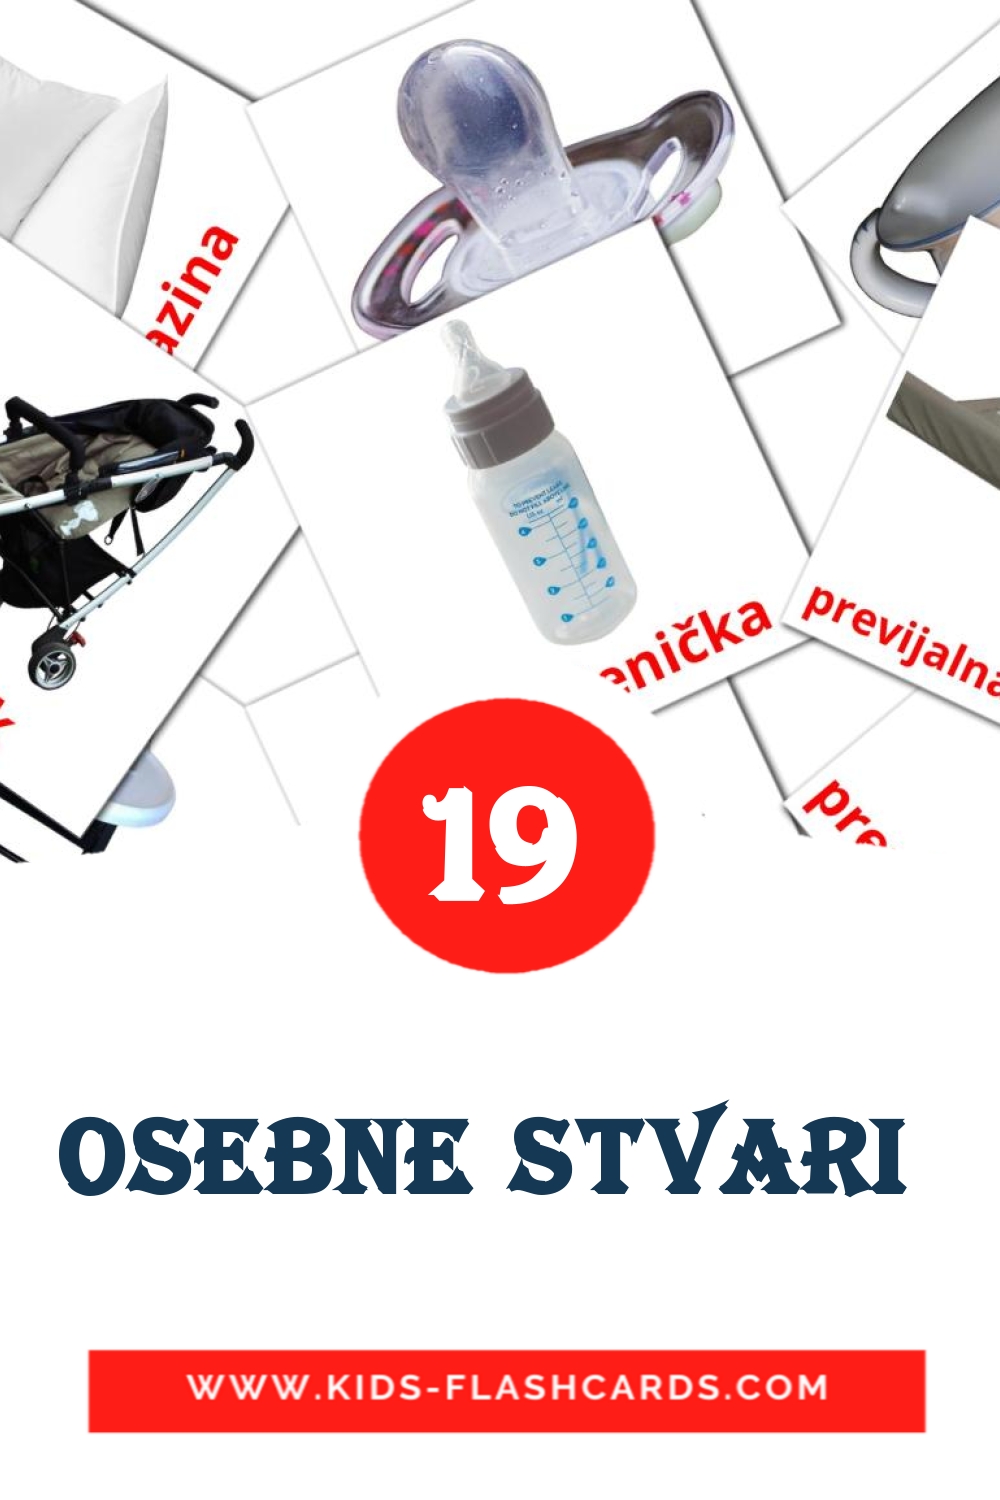 19 Osebne stvari  Picture Cards for Kindergarden in slovenian